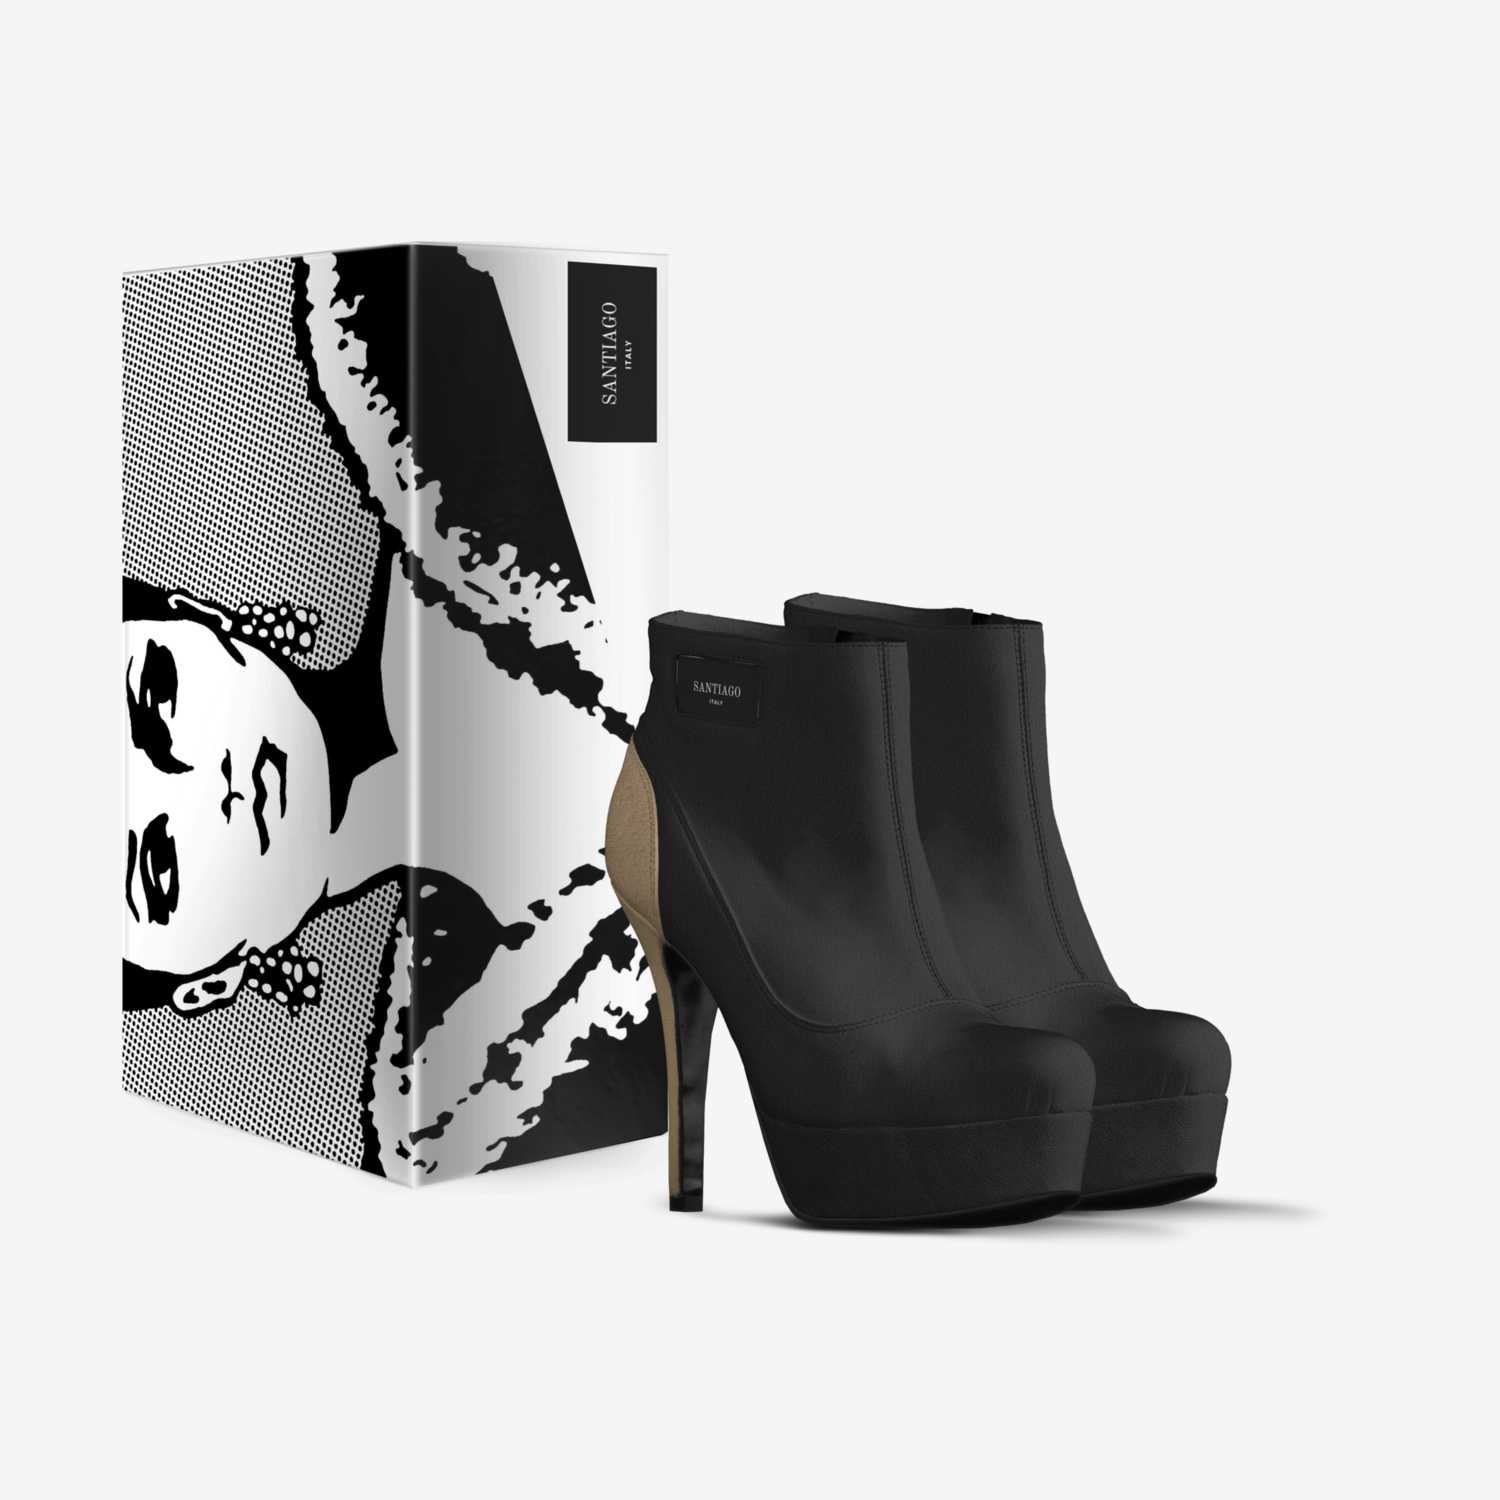 JOCELYN  custom made in Italy shoes by Kvn Elvn | Box view